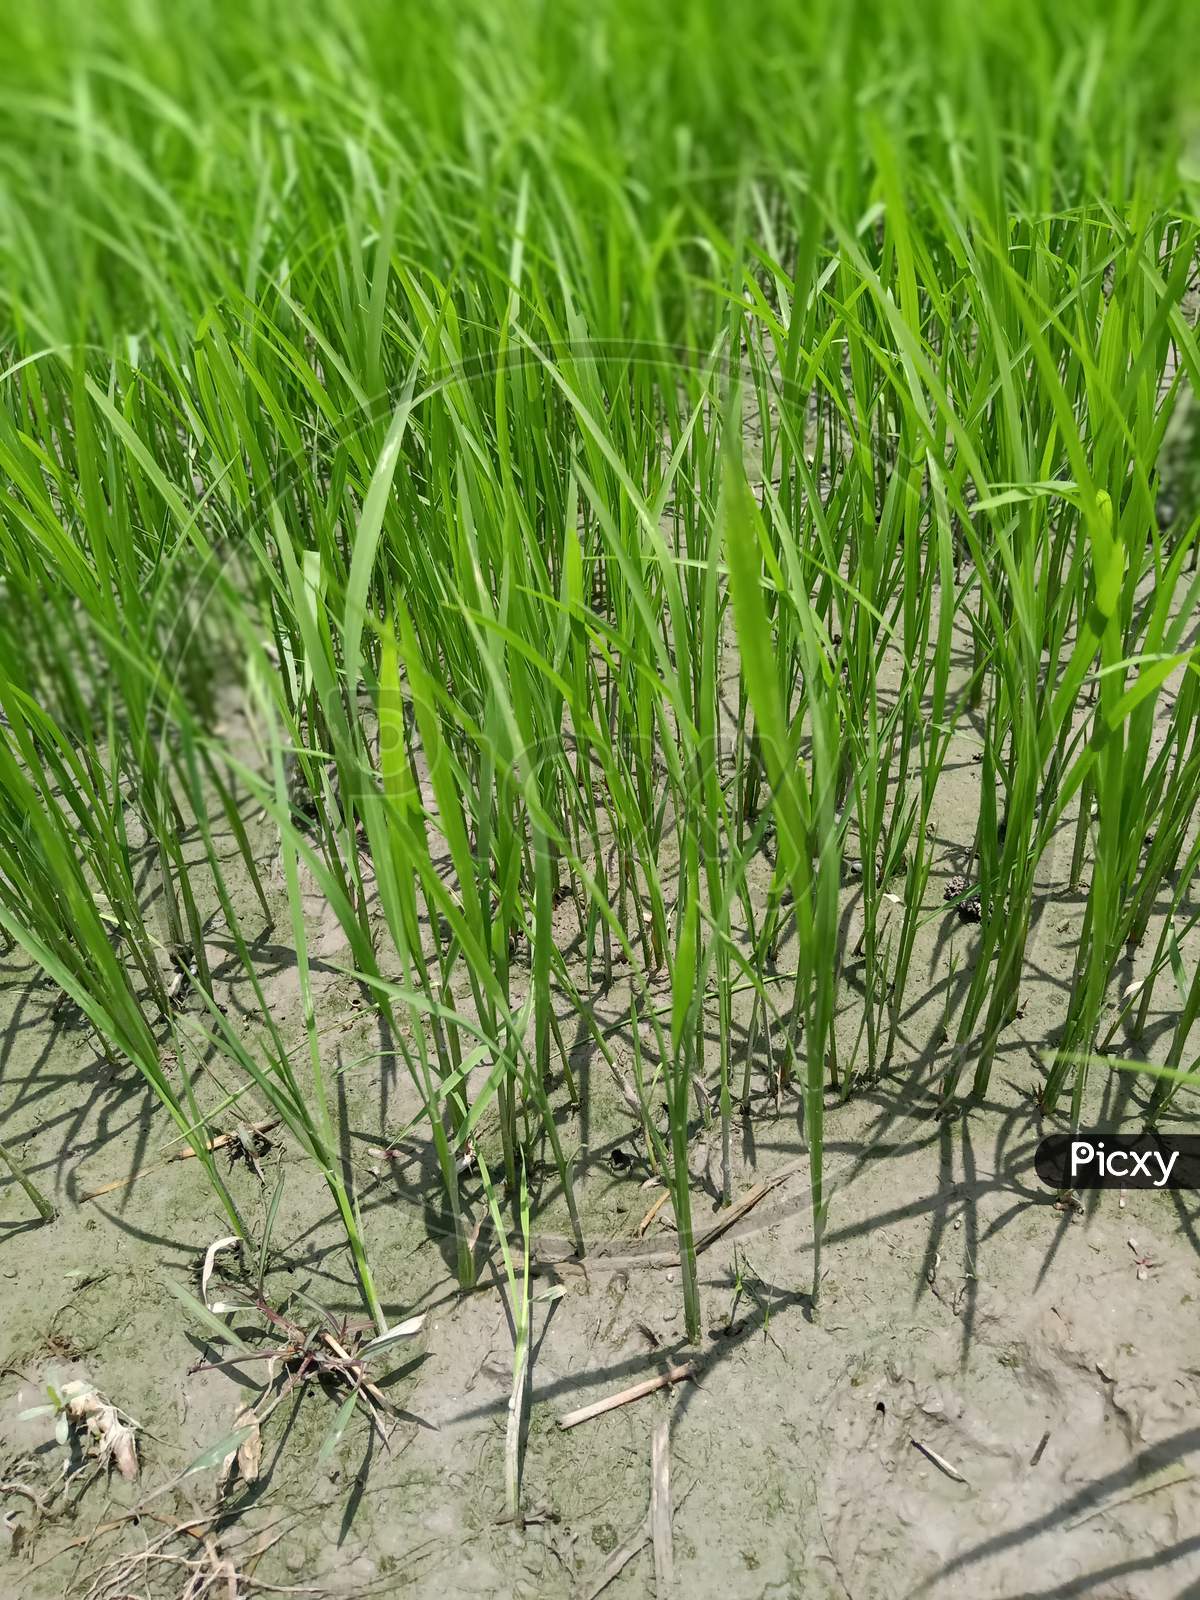 Rice fields, Rice deeds growing on the field